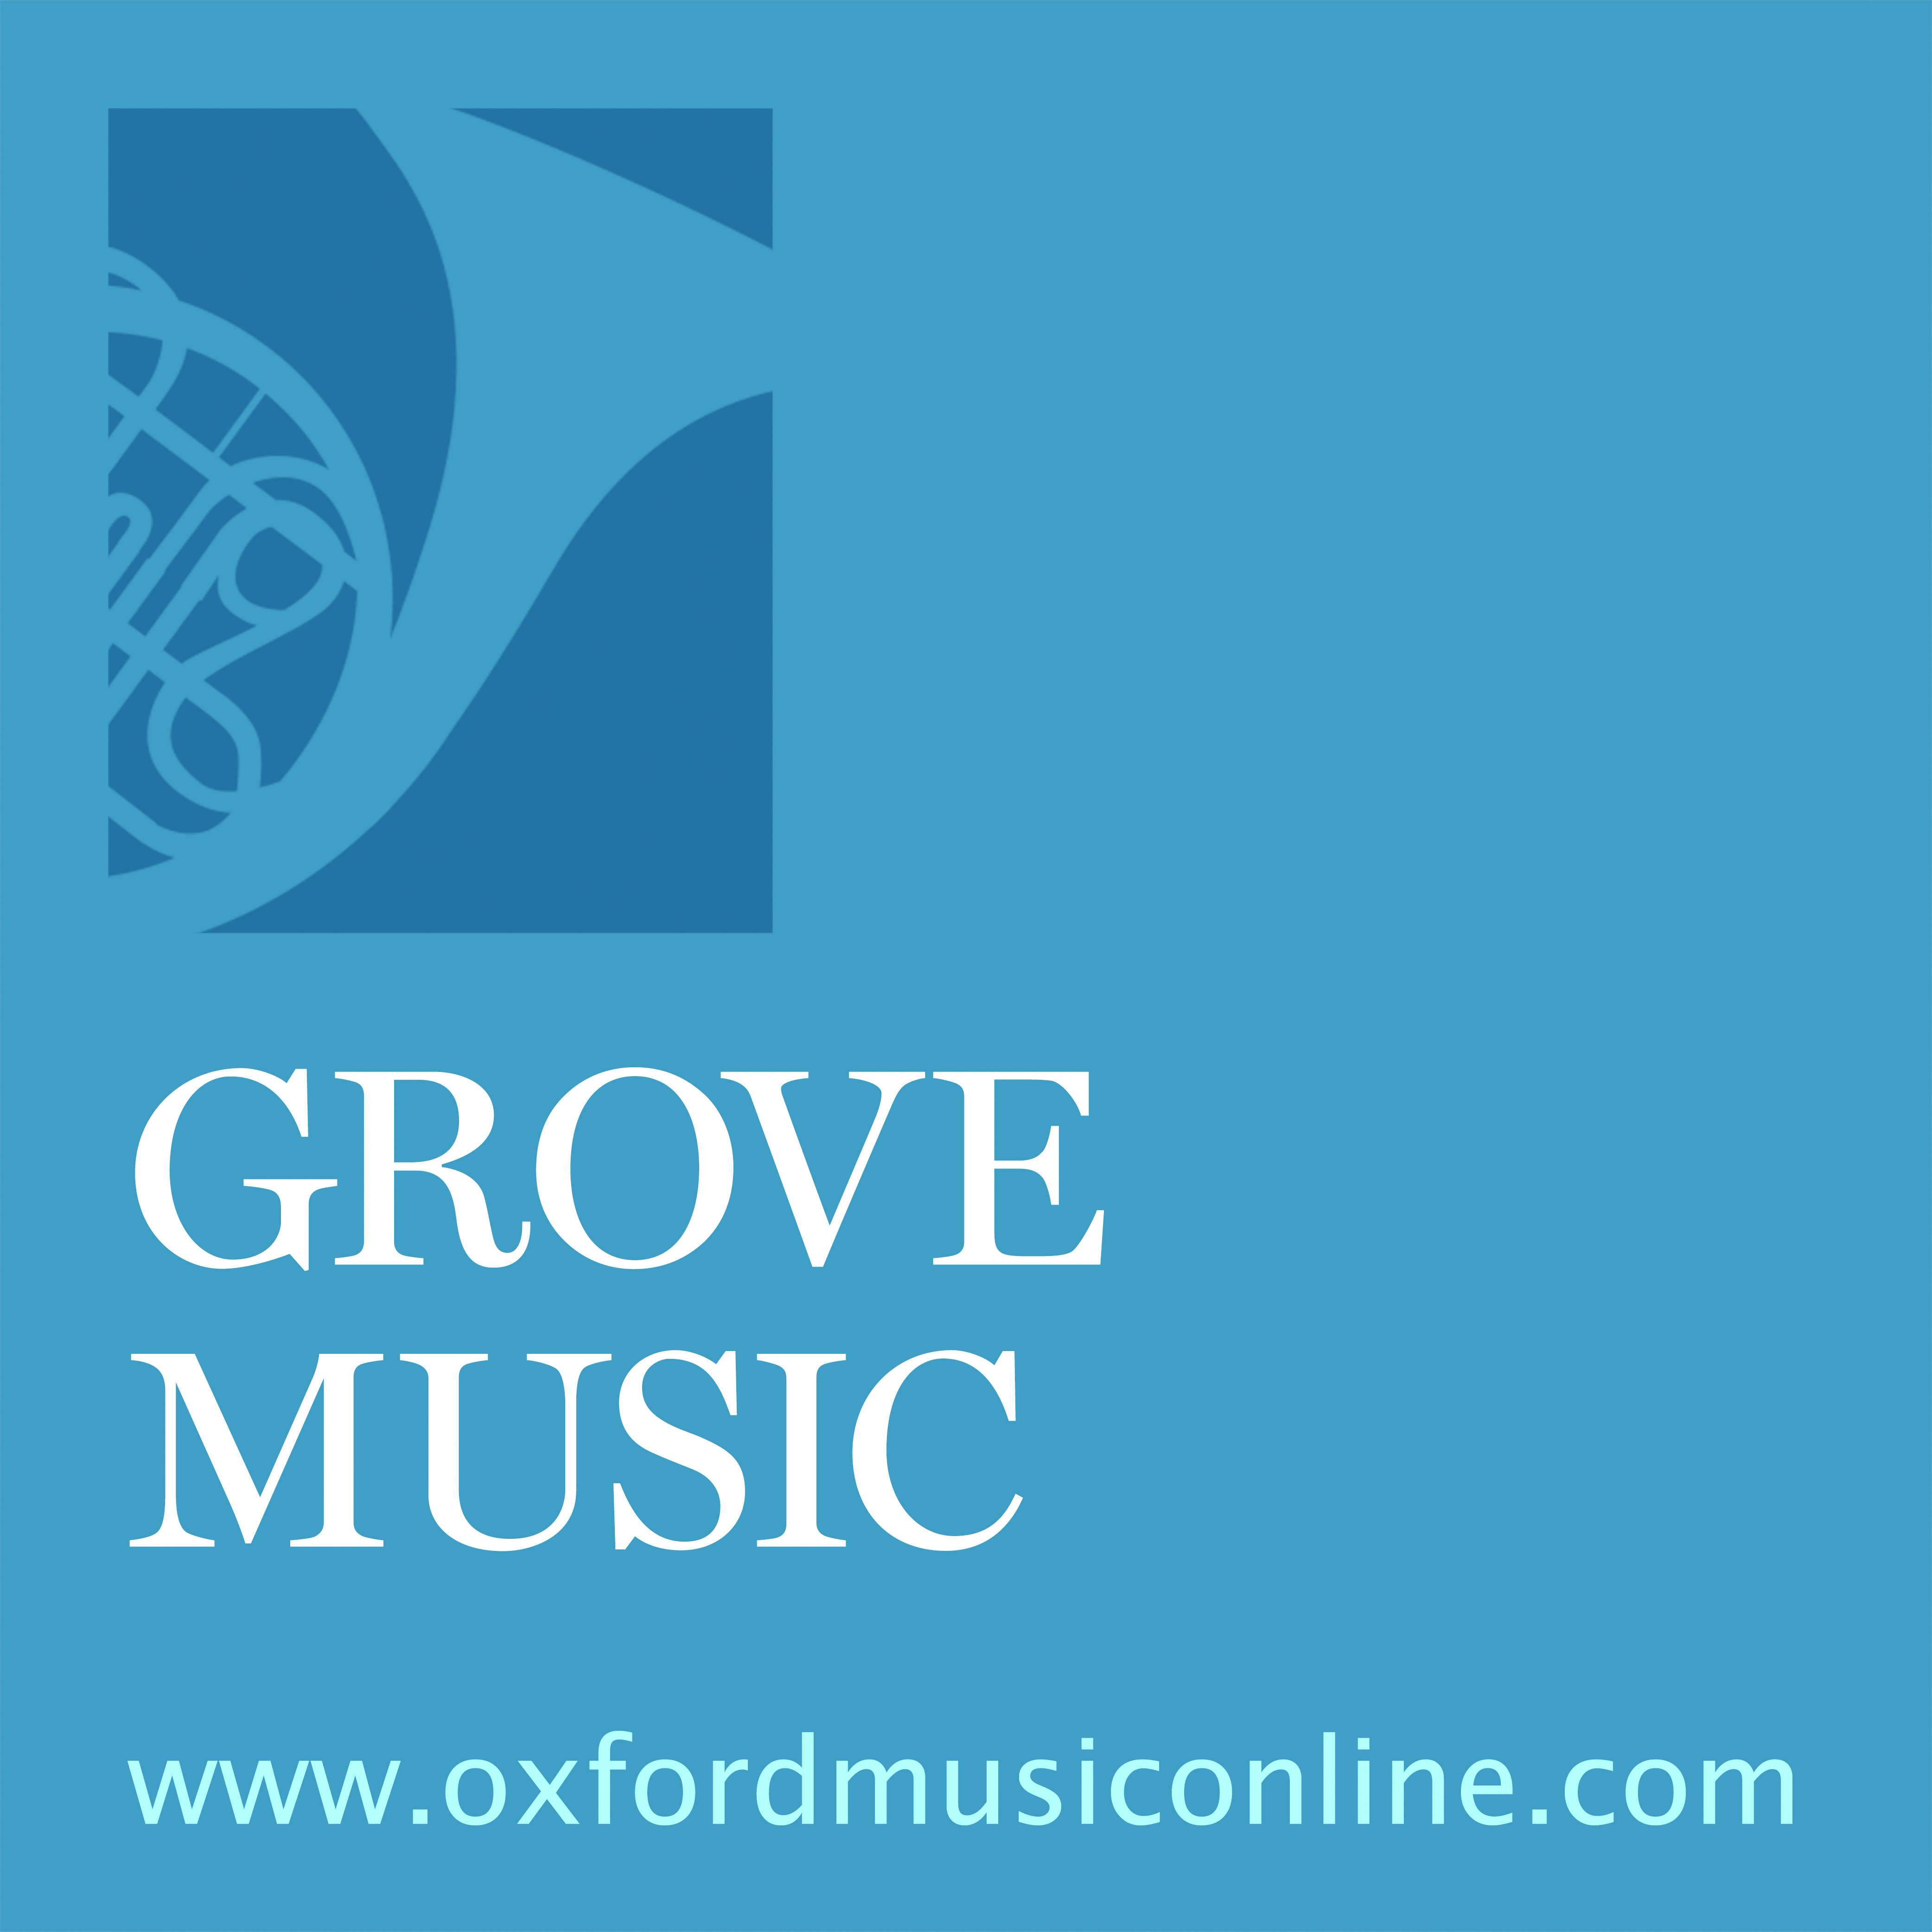  Grove Music Online